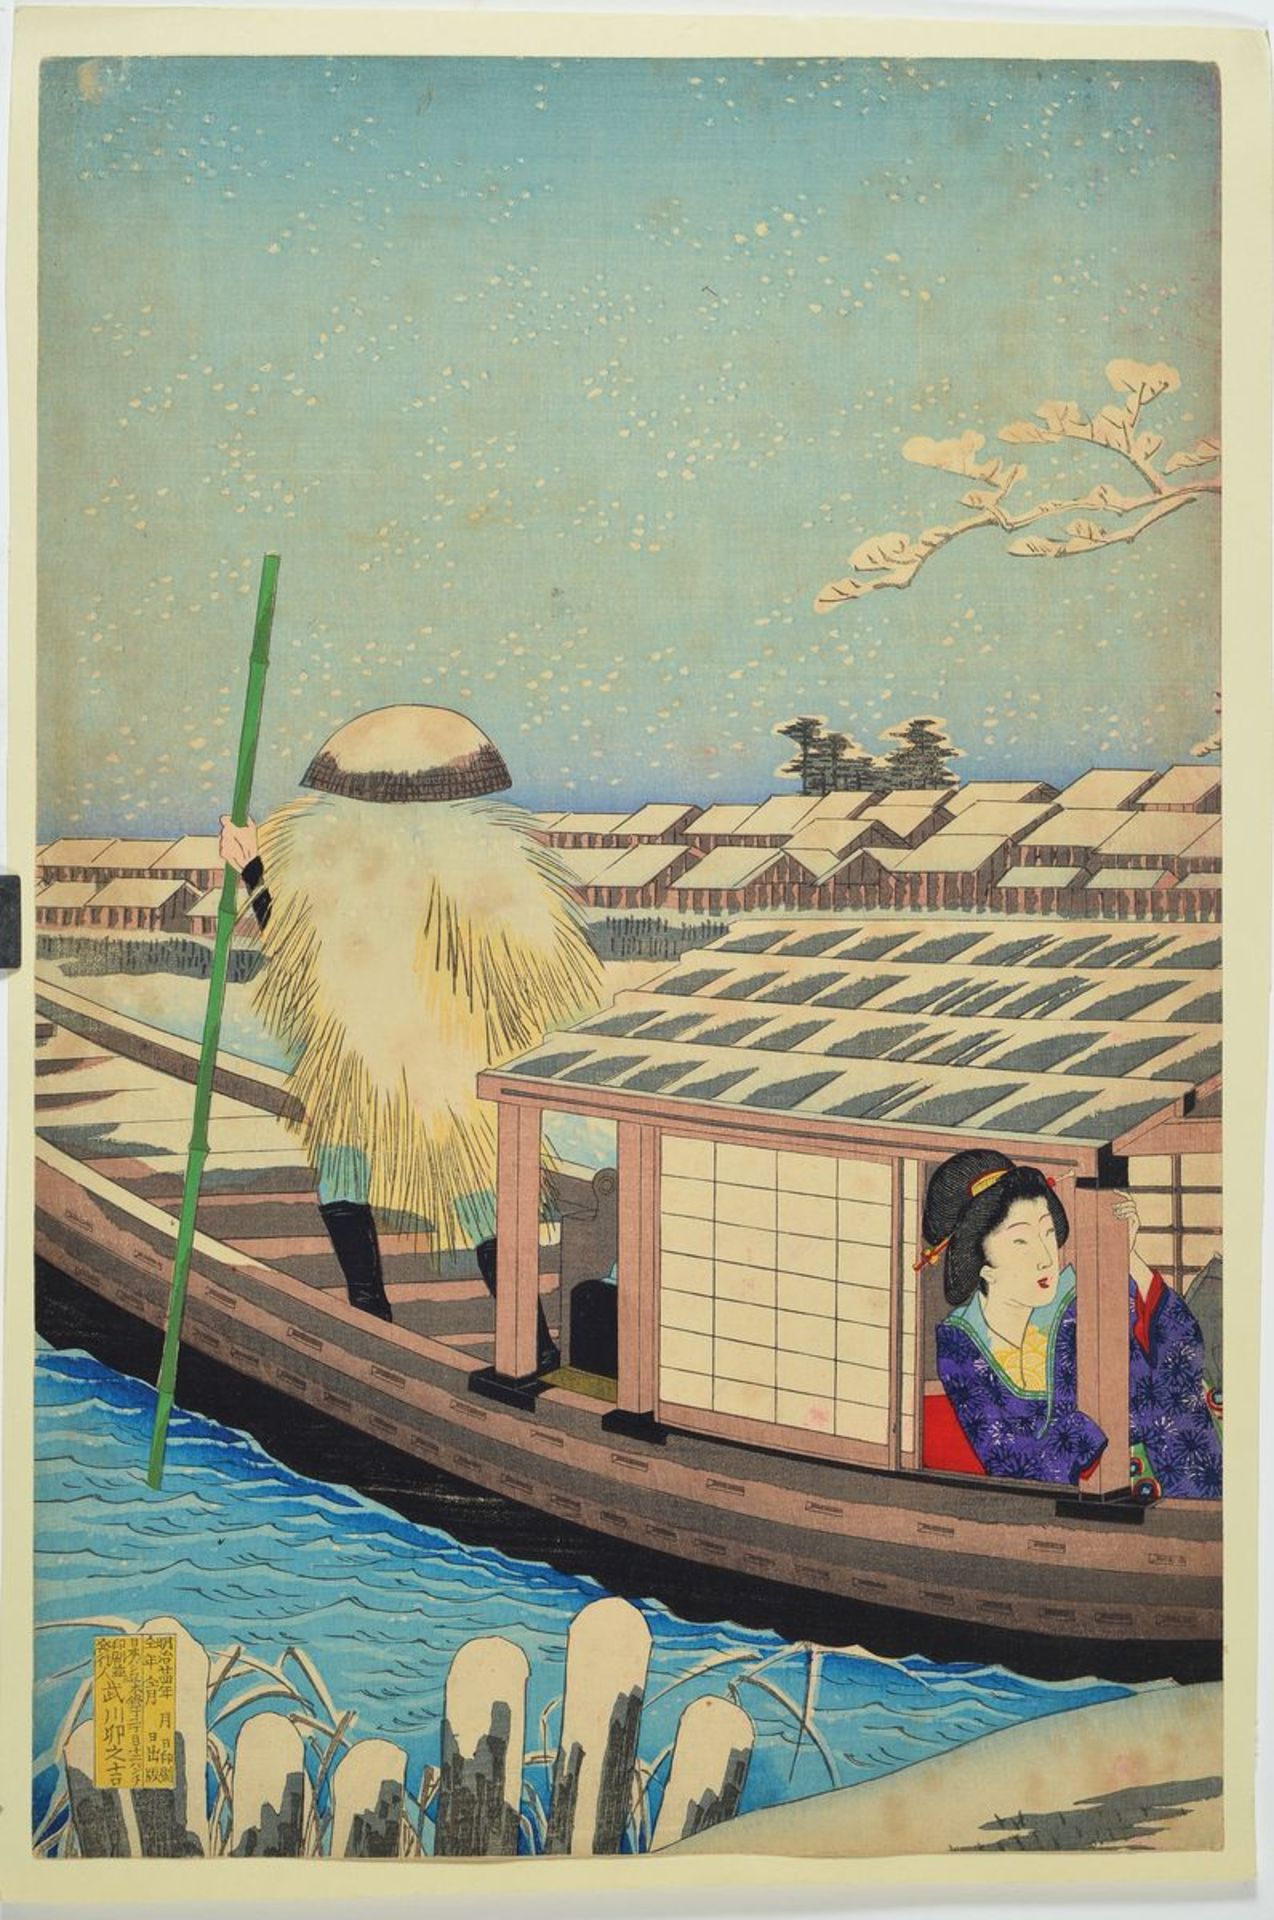 Farbholzschnitt, Japan, 19. Jh., Frau im Boot, 35.5 x 23.5 cmWoodcut in colors, Japan, 19th